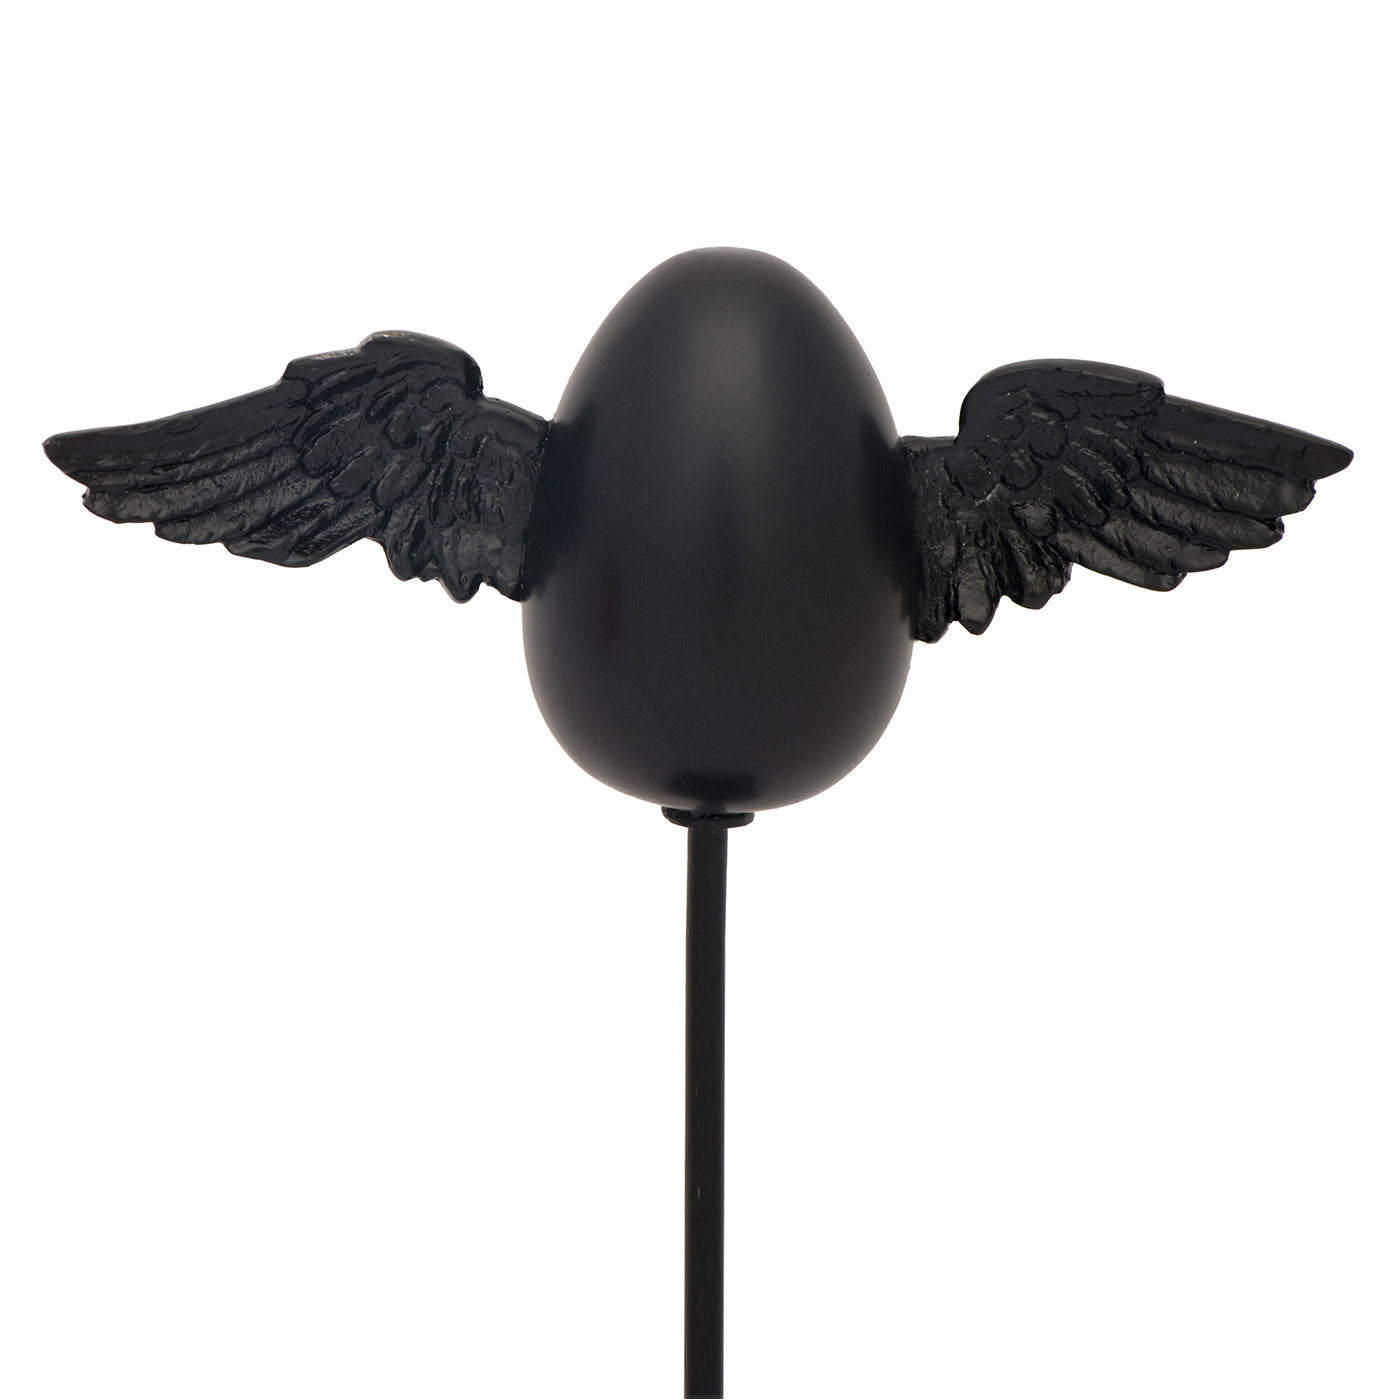 Partenope Egg N°2 Black Small Sculpture - Alternative view 1